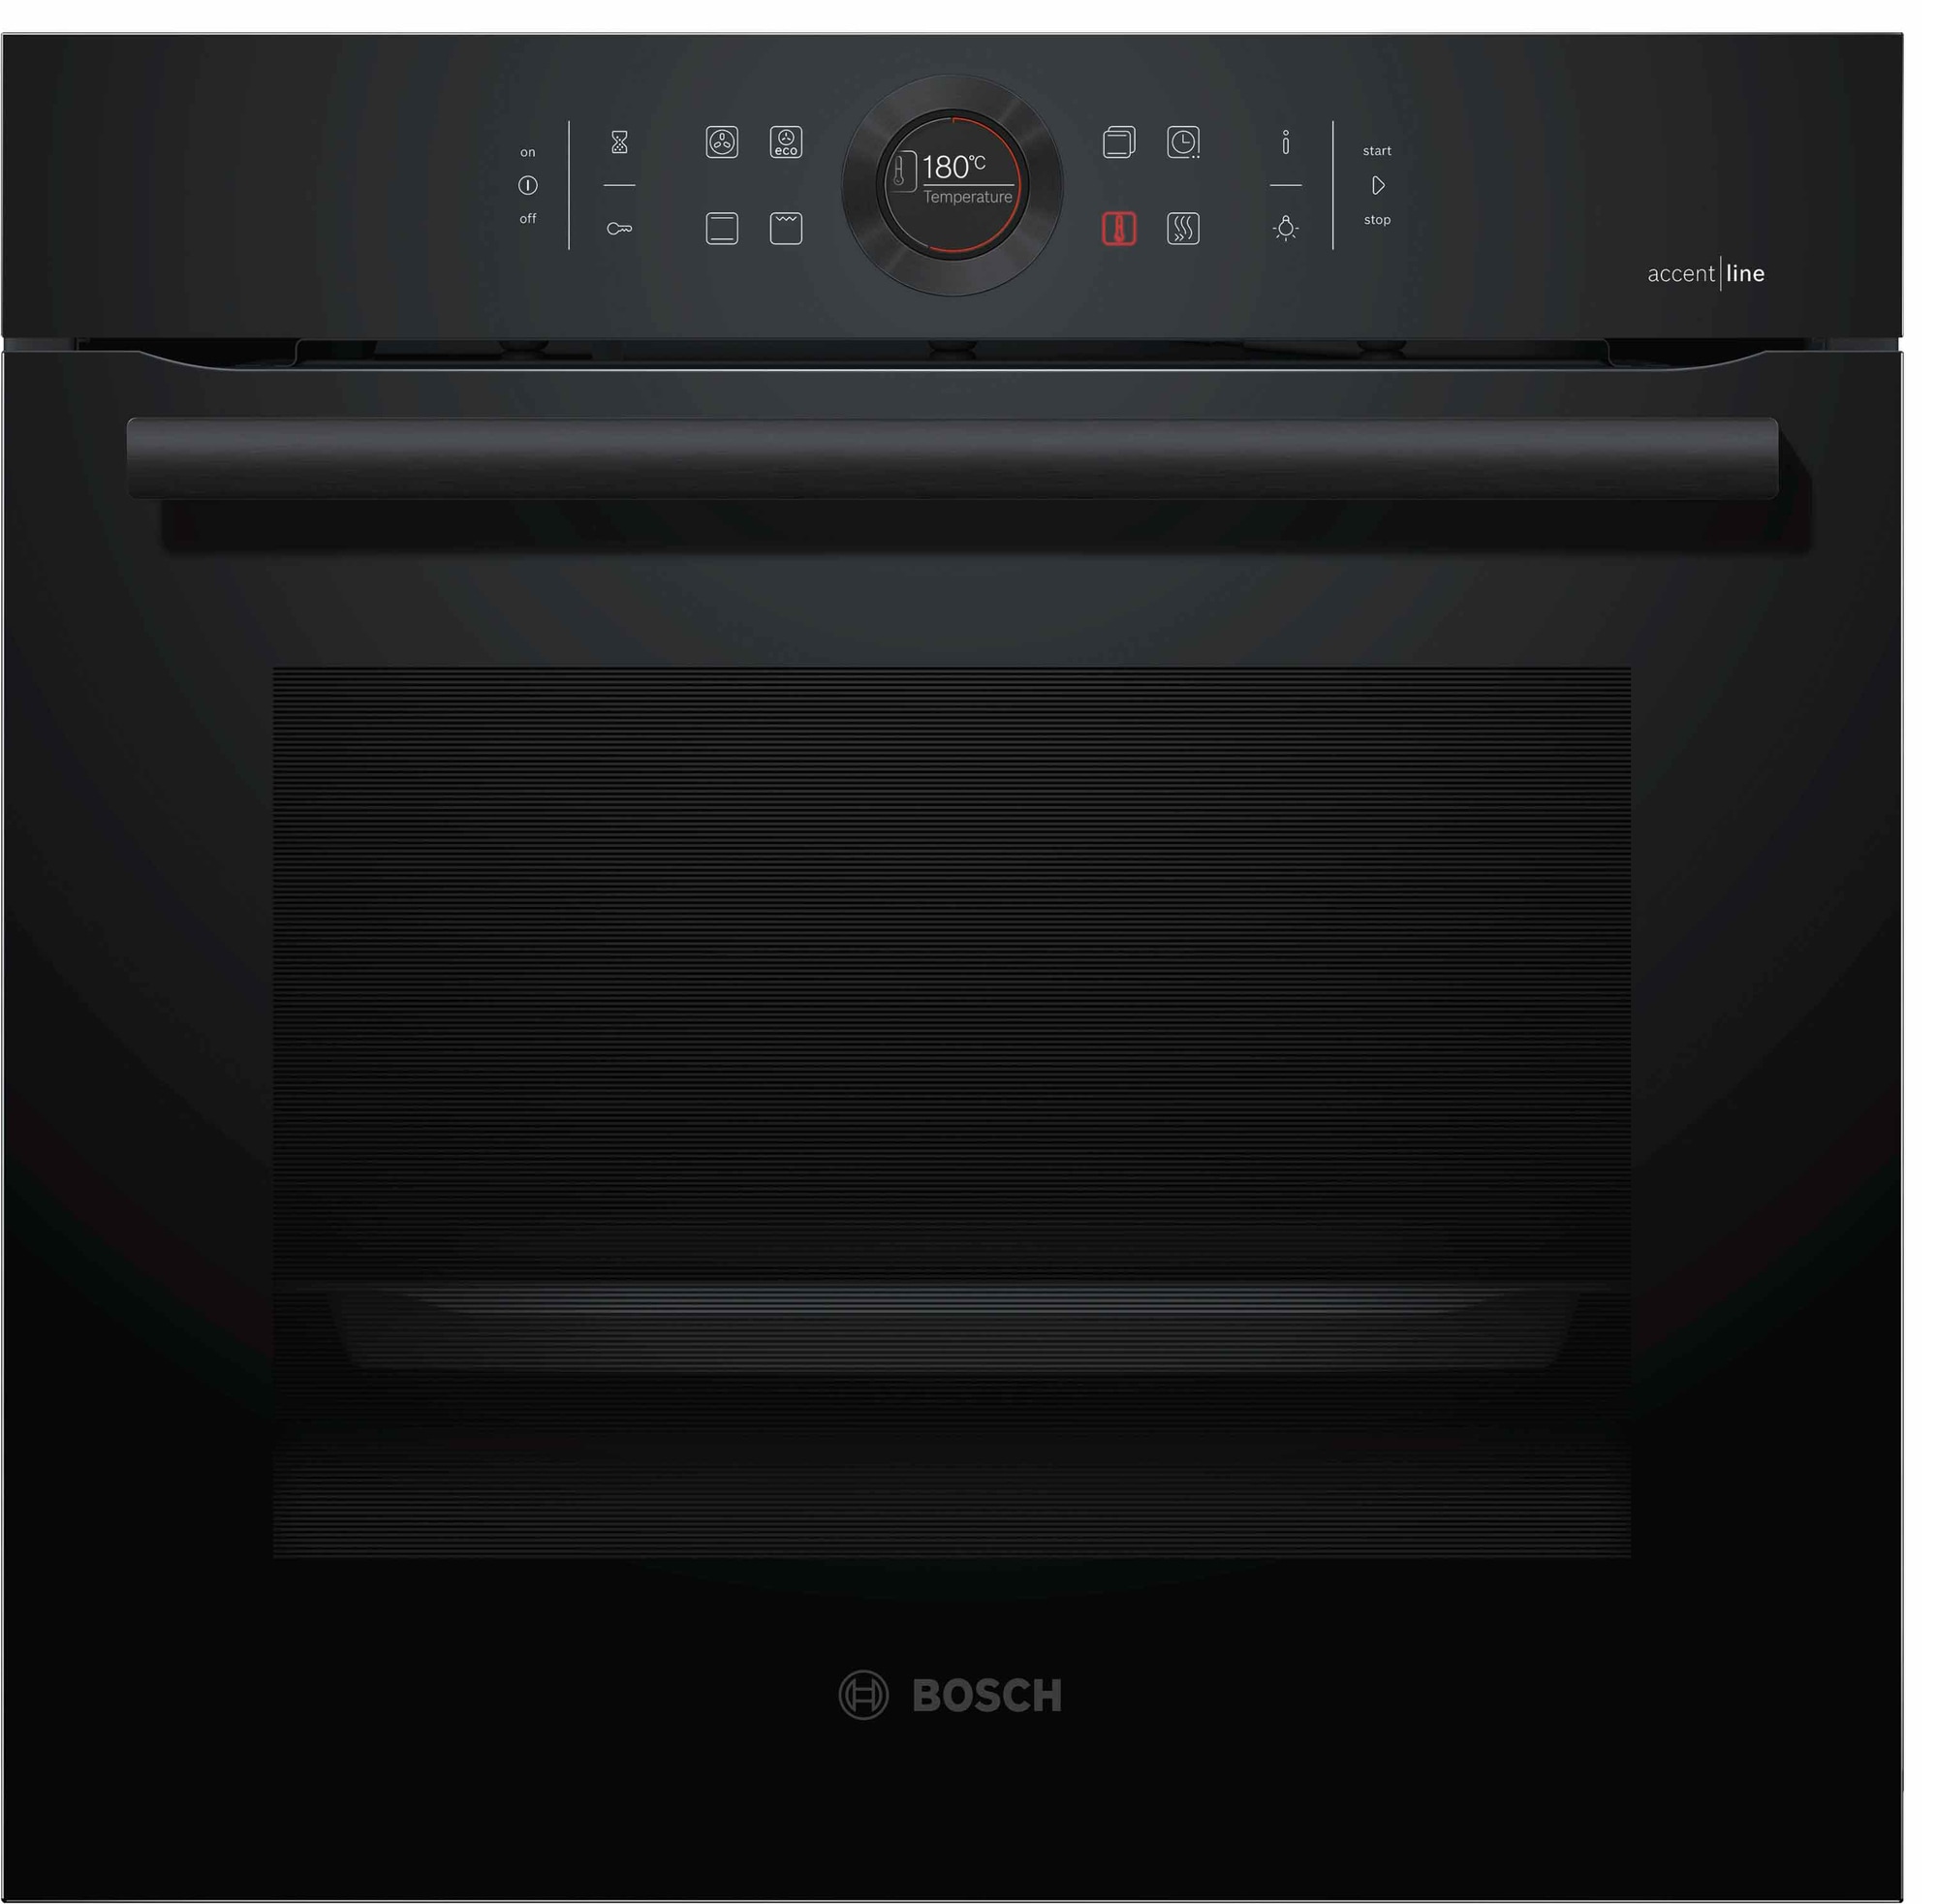 Bosch AccentLine Series 8 integreret ovn  Carbon Black thumbnail